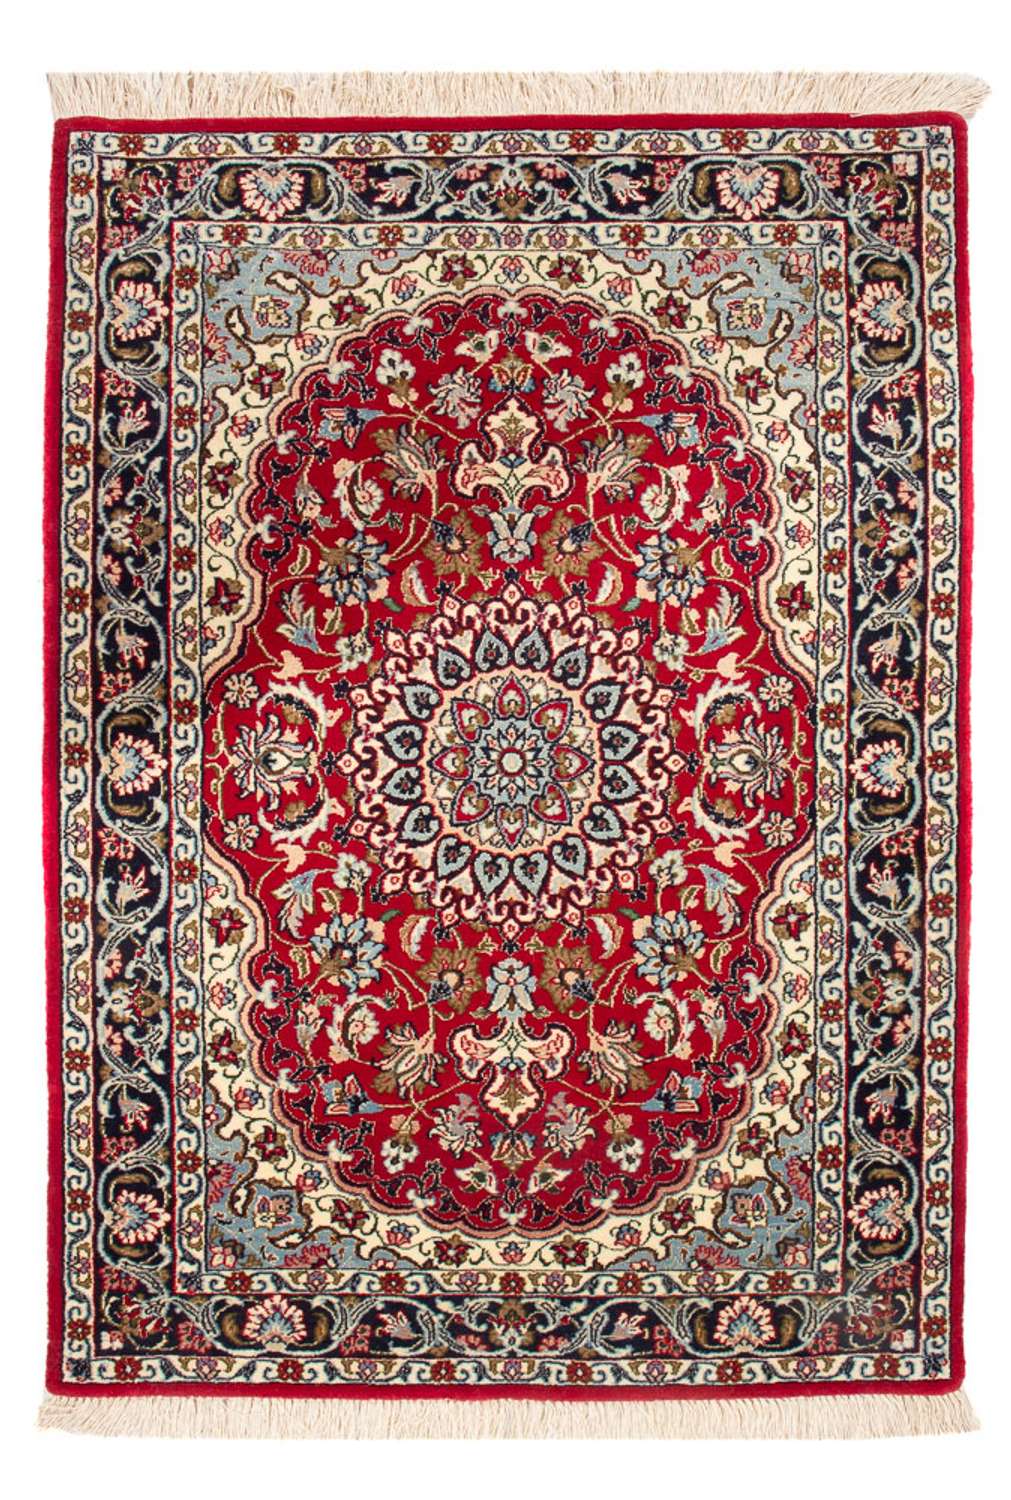 Perserteppich - Isfahan - Premium - 108 x 70 cm - rot